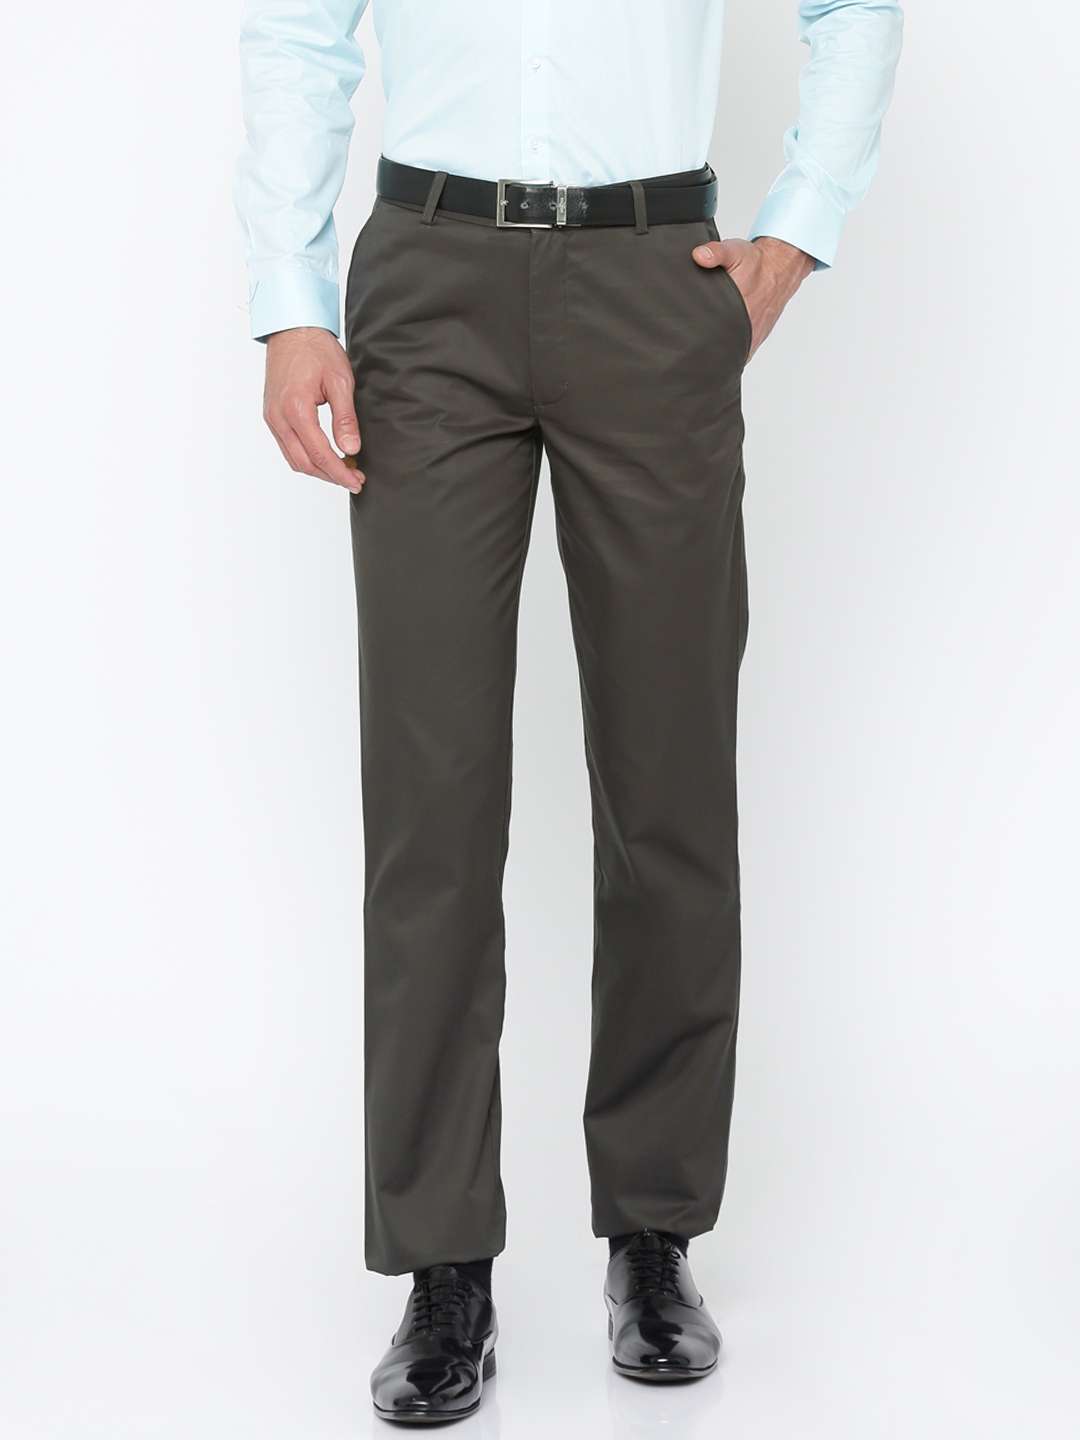 Buy Wills Lifestyle Men Chracoal Grey Regular Fit Formal Trousers ...